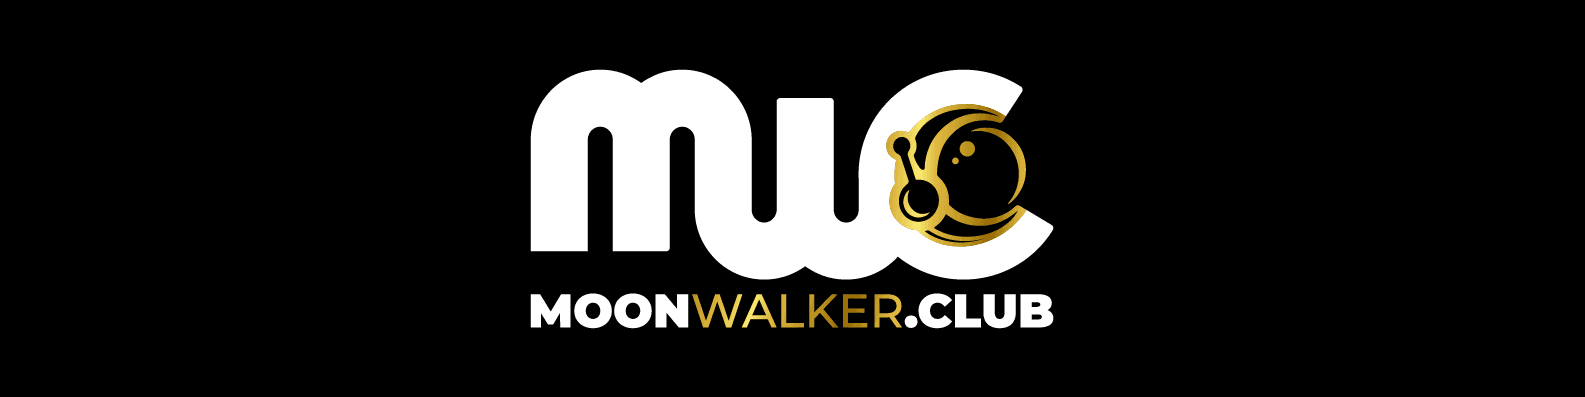 moonwalkerclub bannière